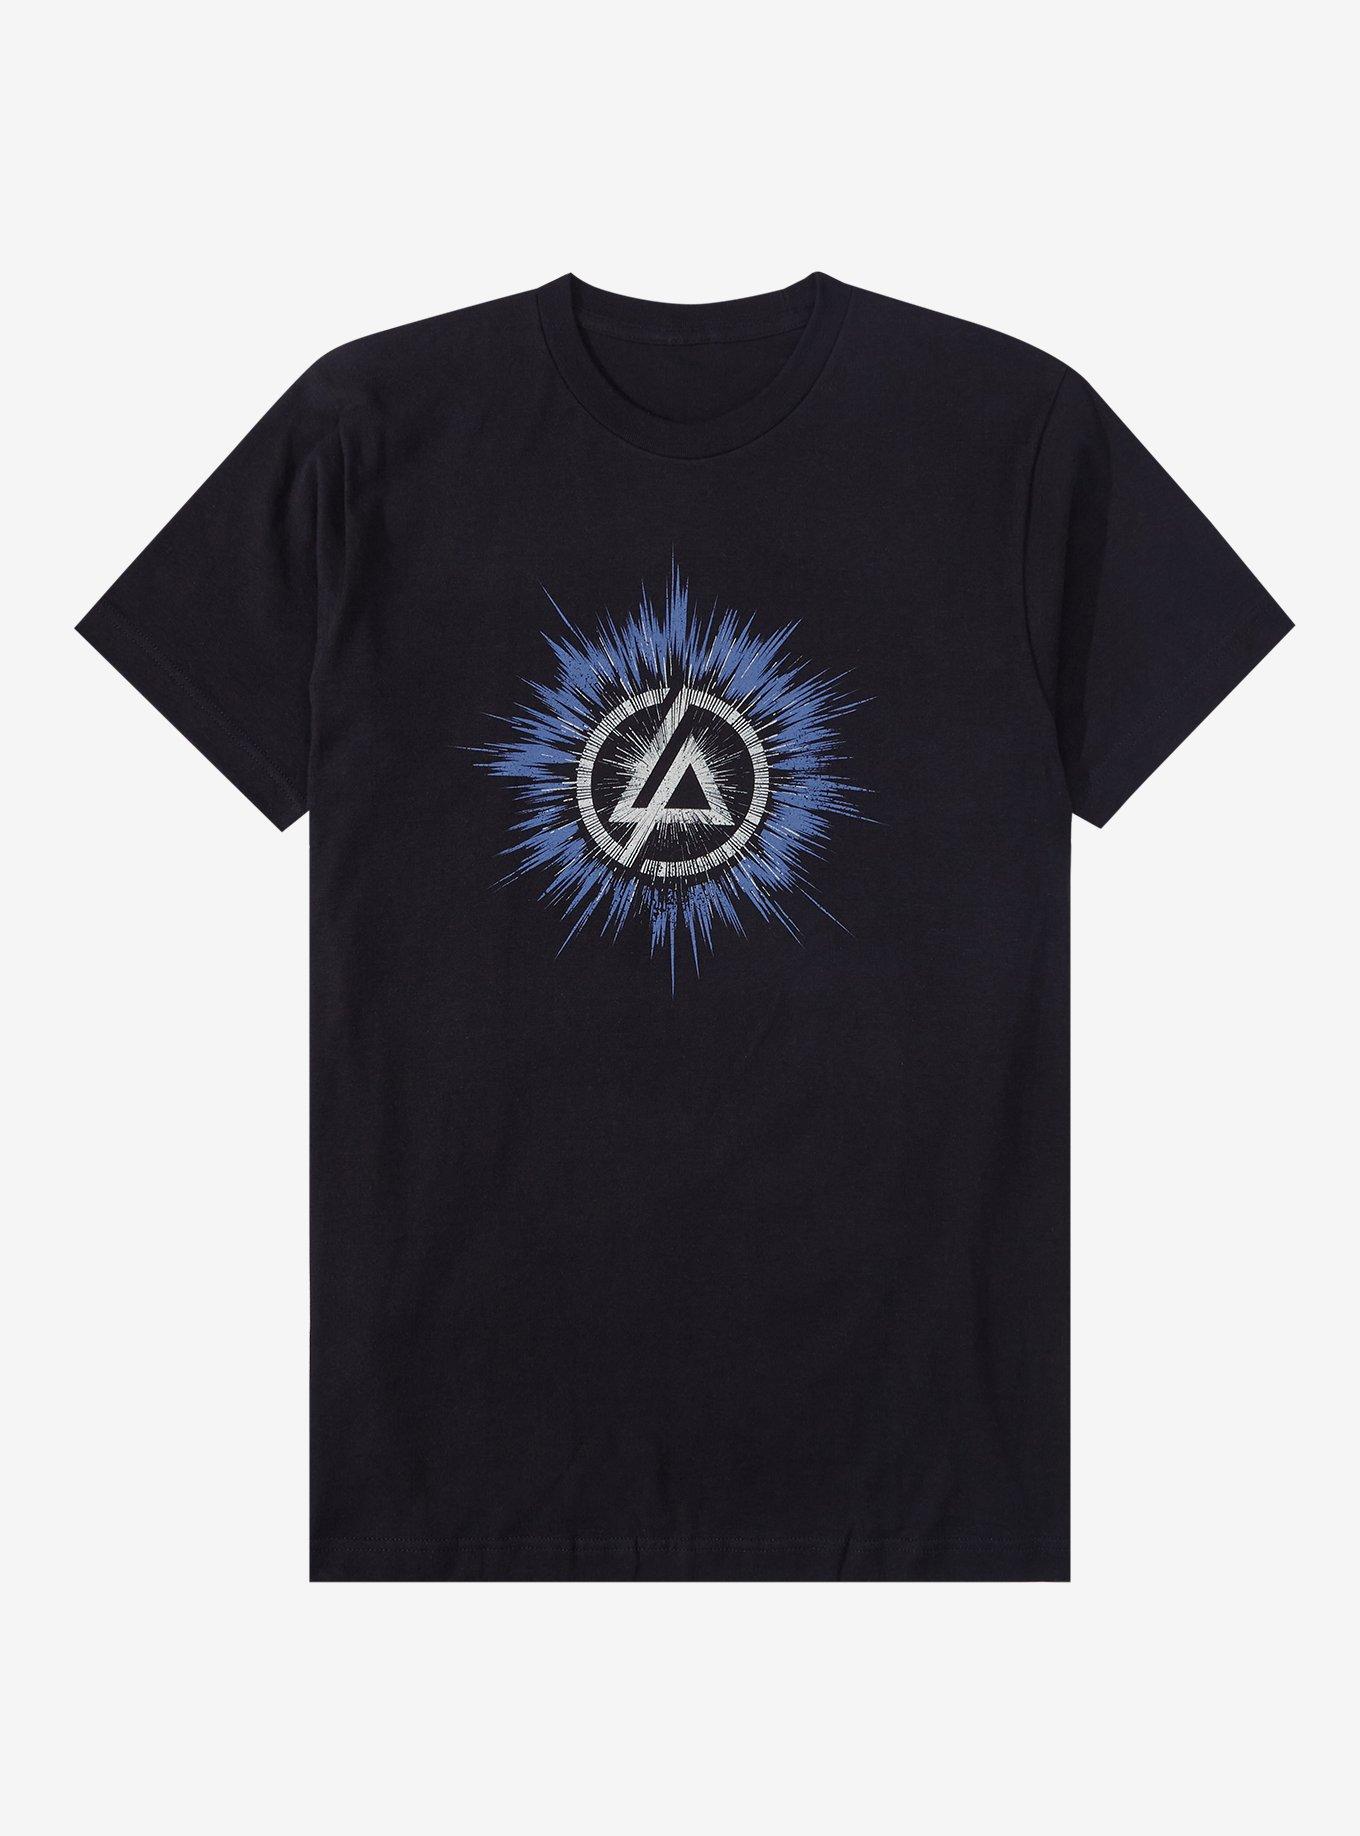 Linkin Park Band Symbol T-Shirt | Hot Topic